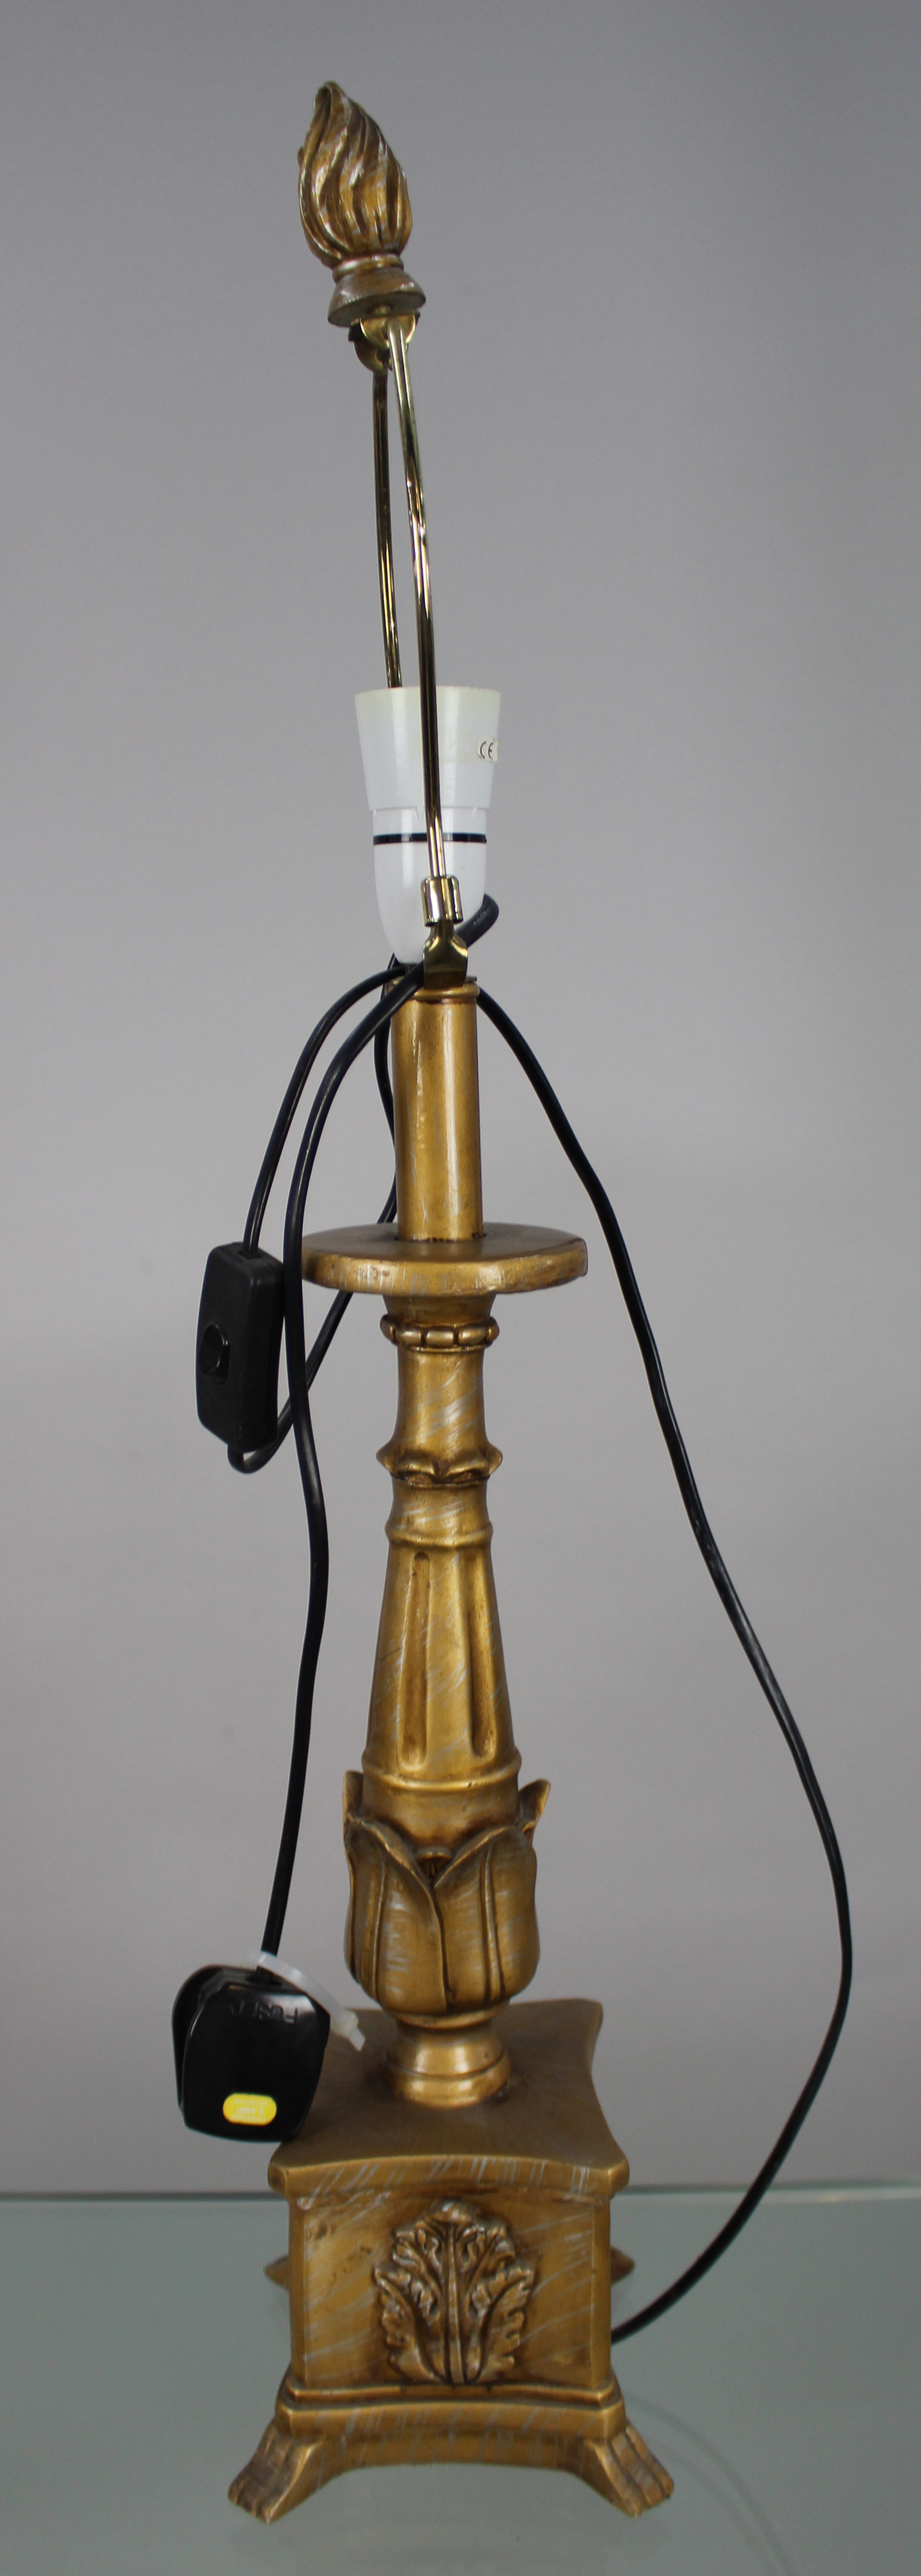 Decorative Composite Gilt Table Lamp - Image 2 of 2